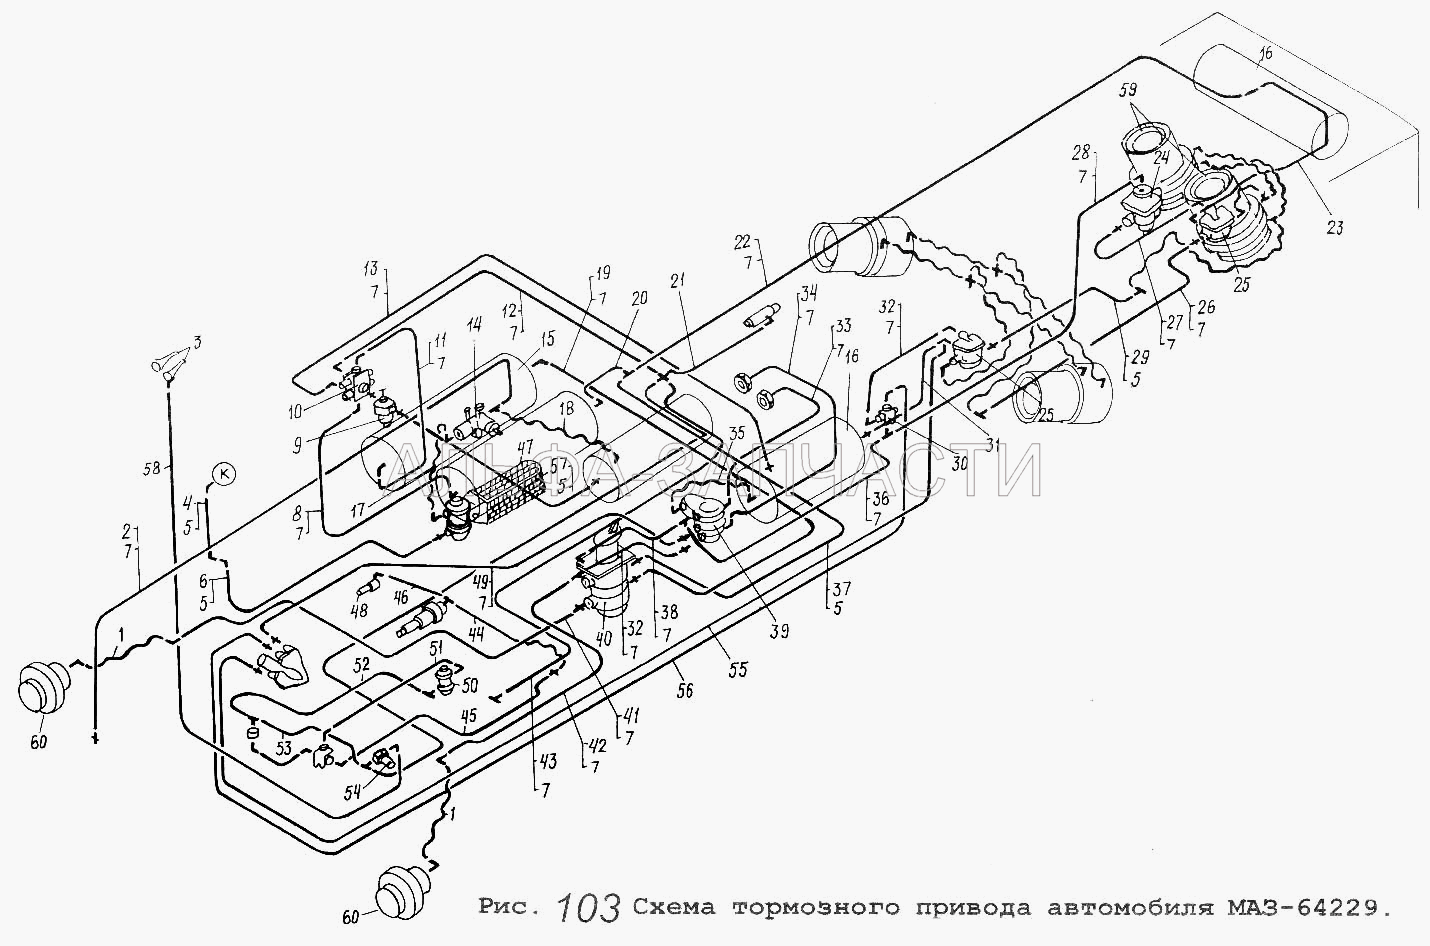 Схема тормозного привода автомобиля МАЗ-64229  